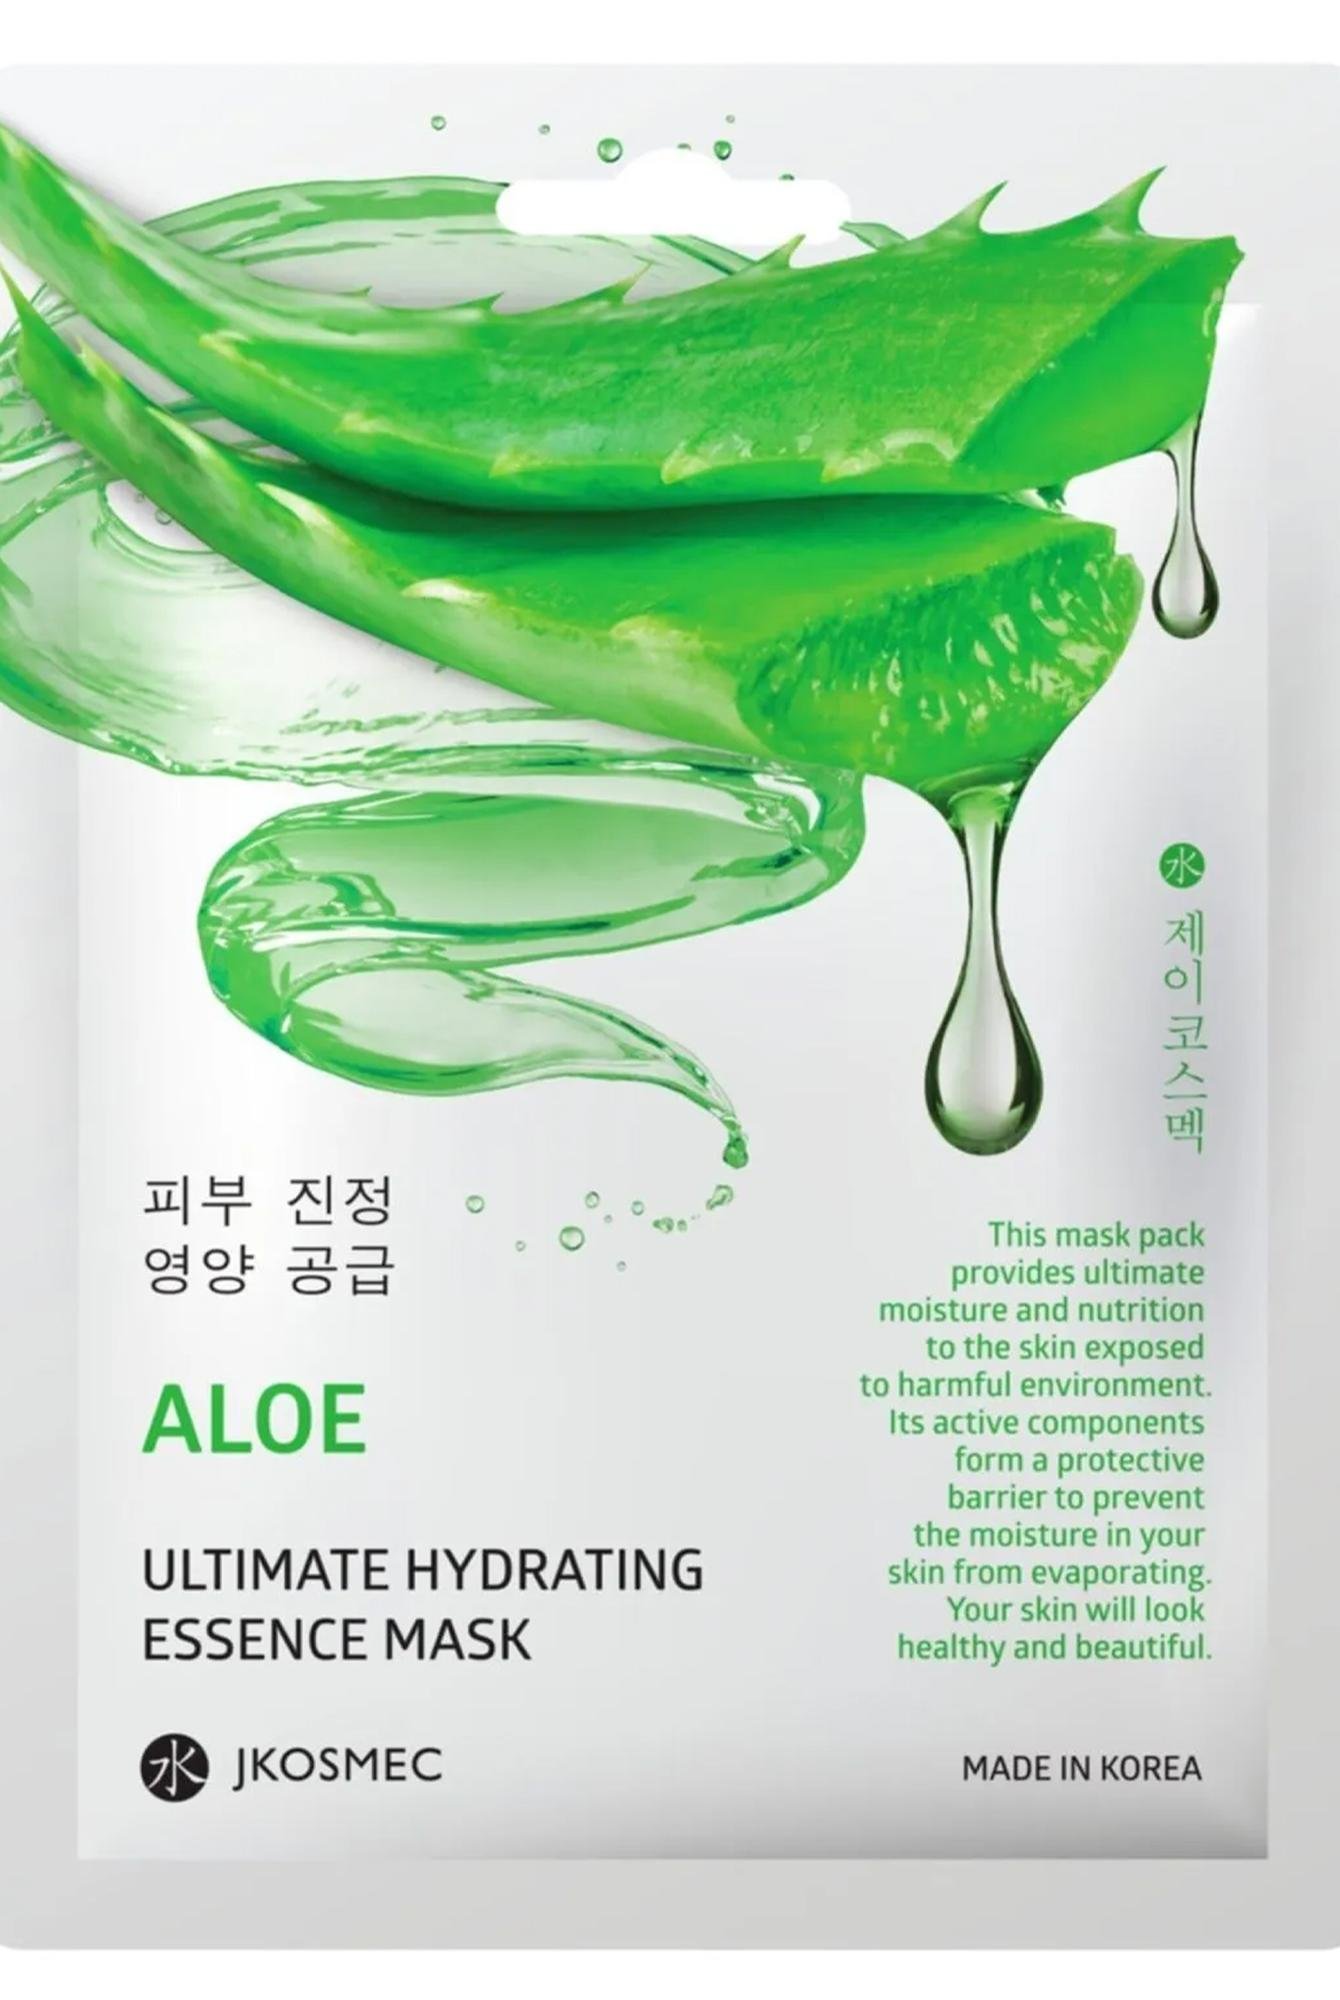  JKosmec Aloe Ultimate Hydrating Essence Mask